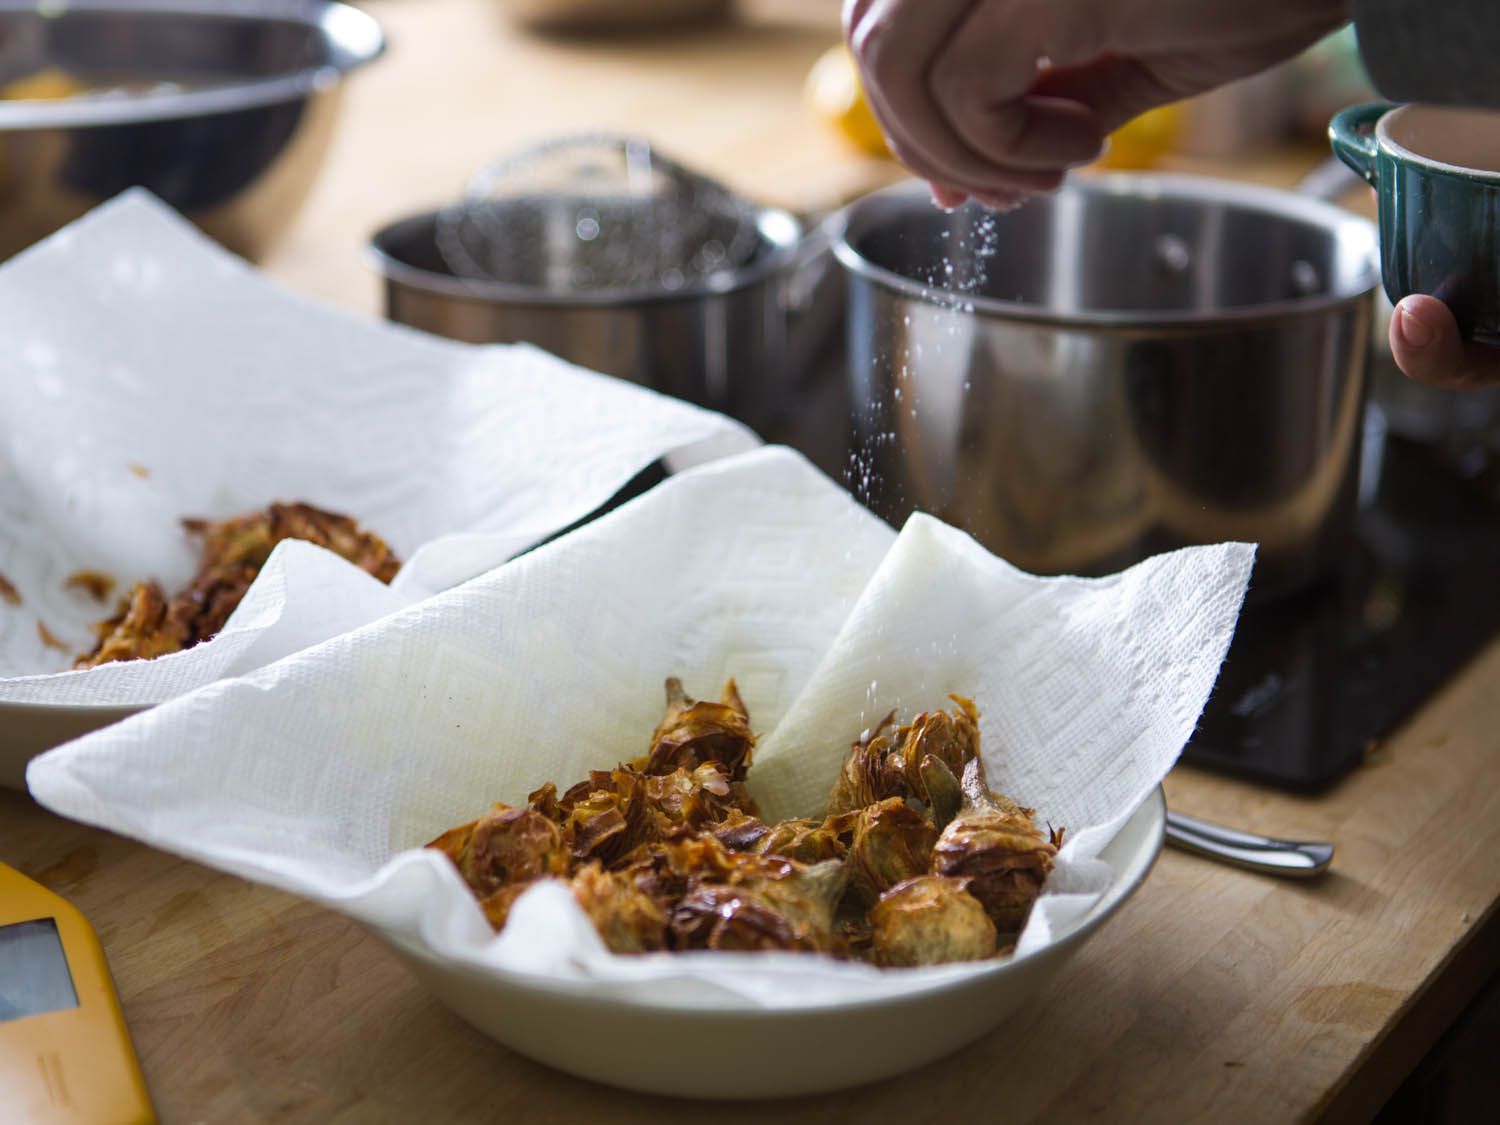 Sprinkling salt on fried artichoke hearts drained on paper towel-lined bowls.